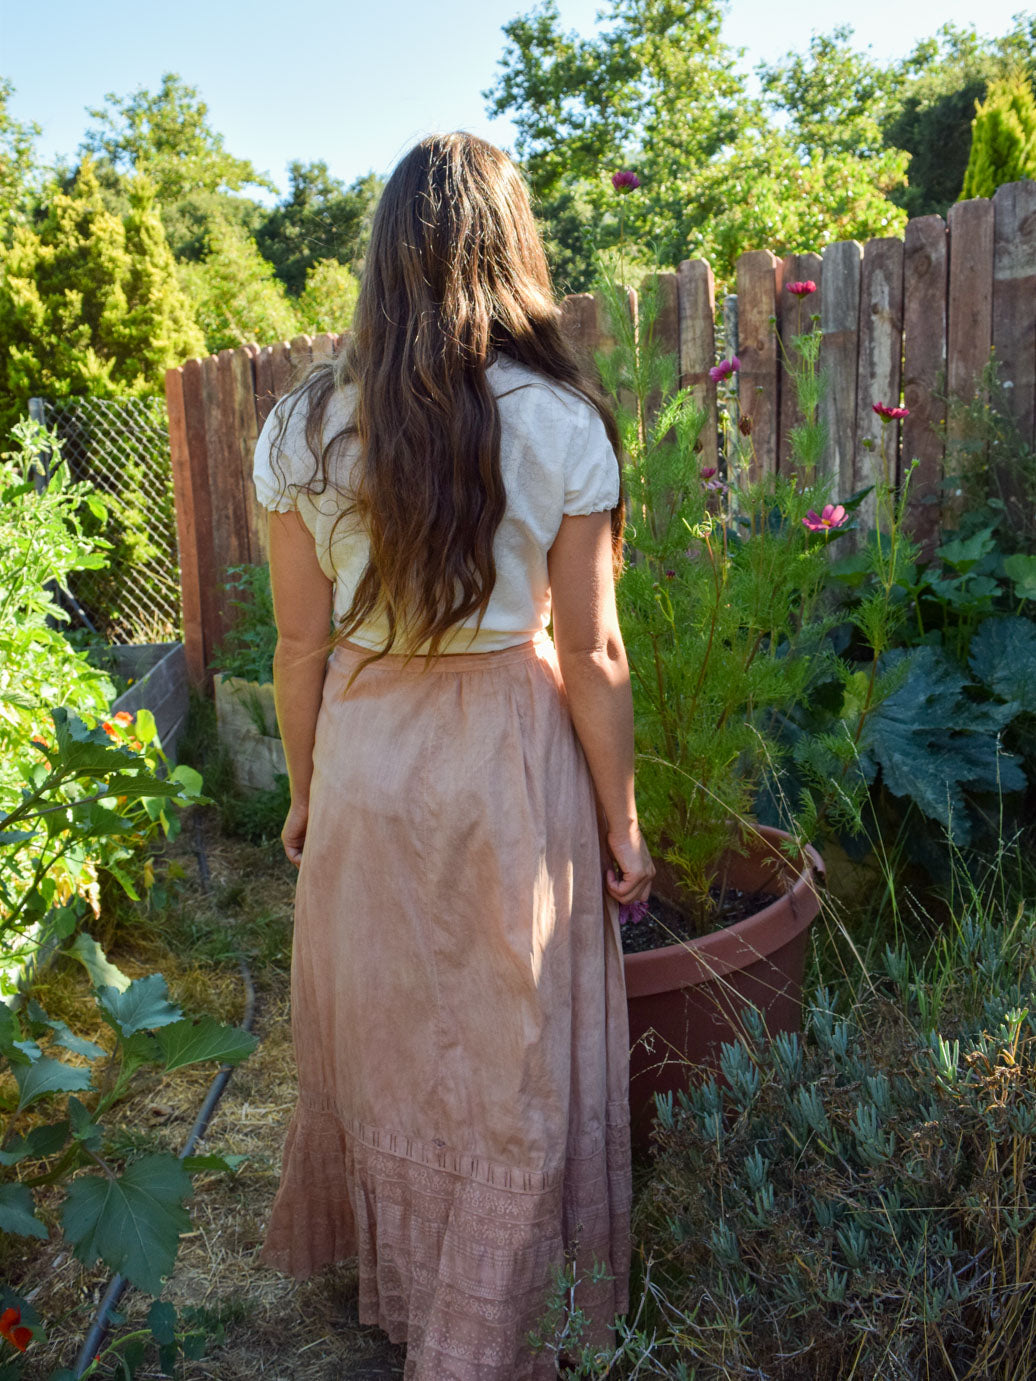 Cutch Victorian Lace Skirt